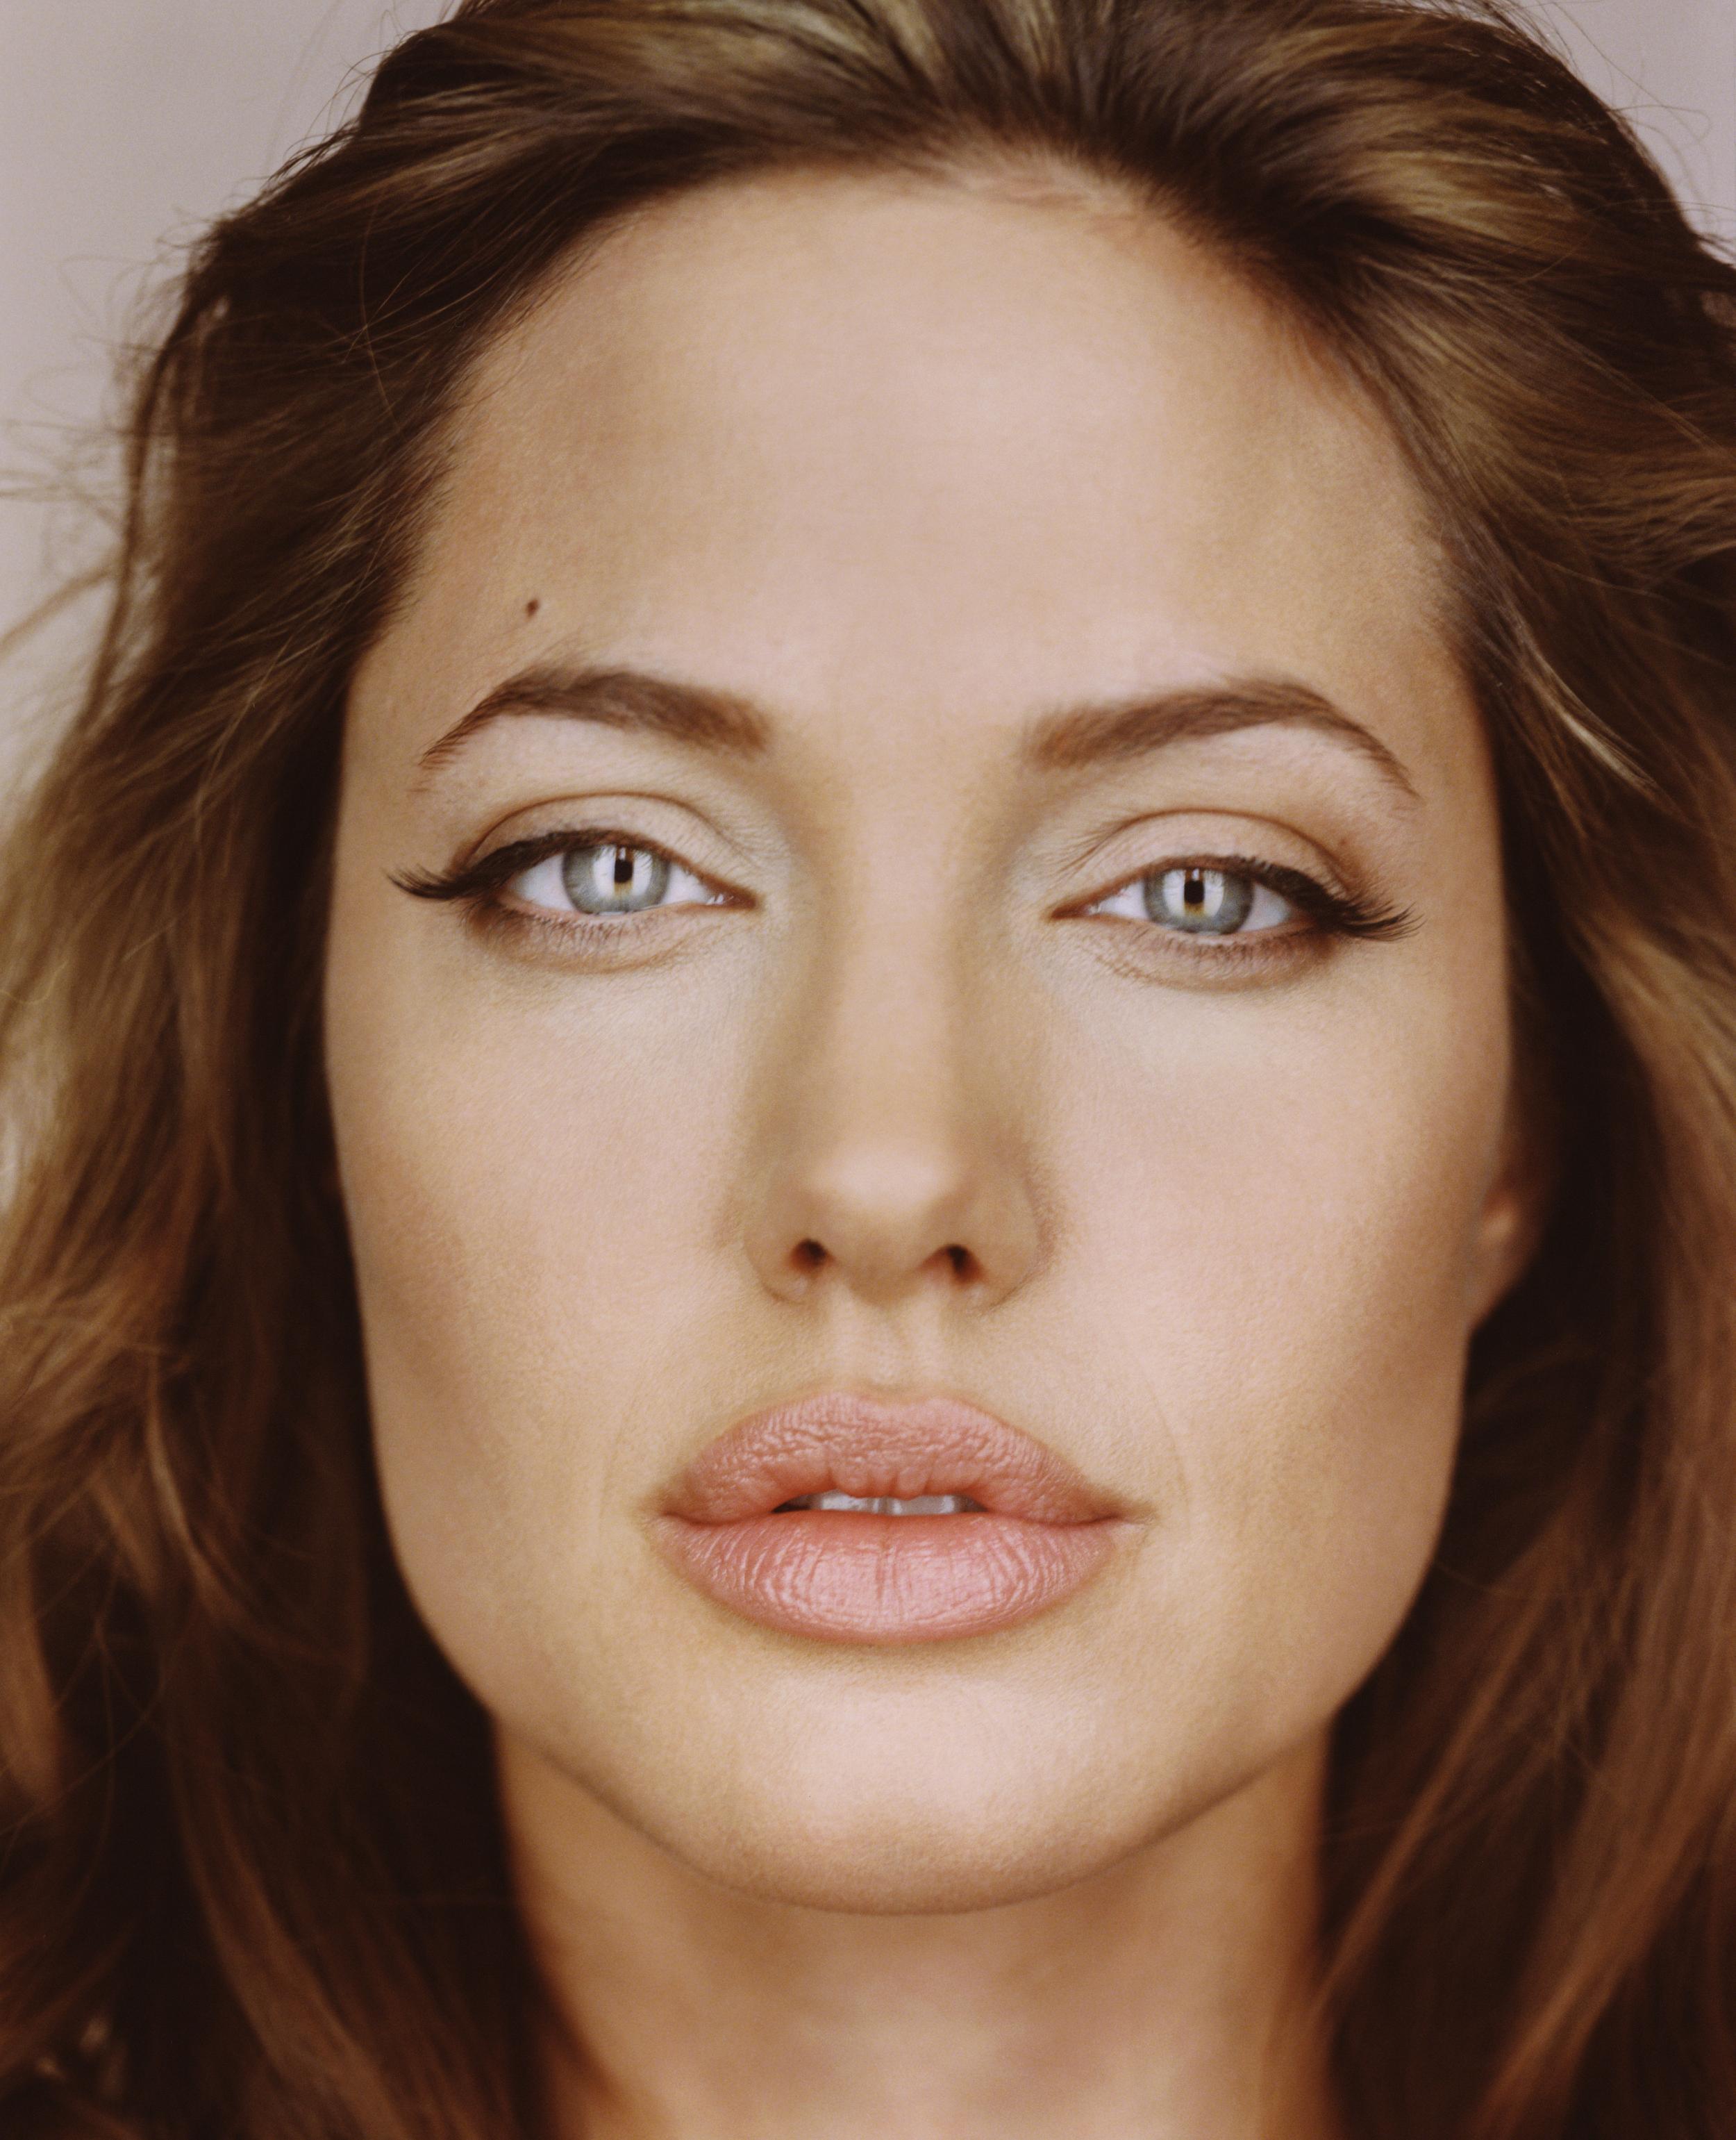 Angelina Jolie photo 160 of 3643 pics, wallpaper - photo #28678 - ThePlace2